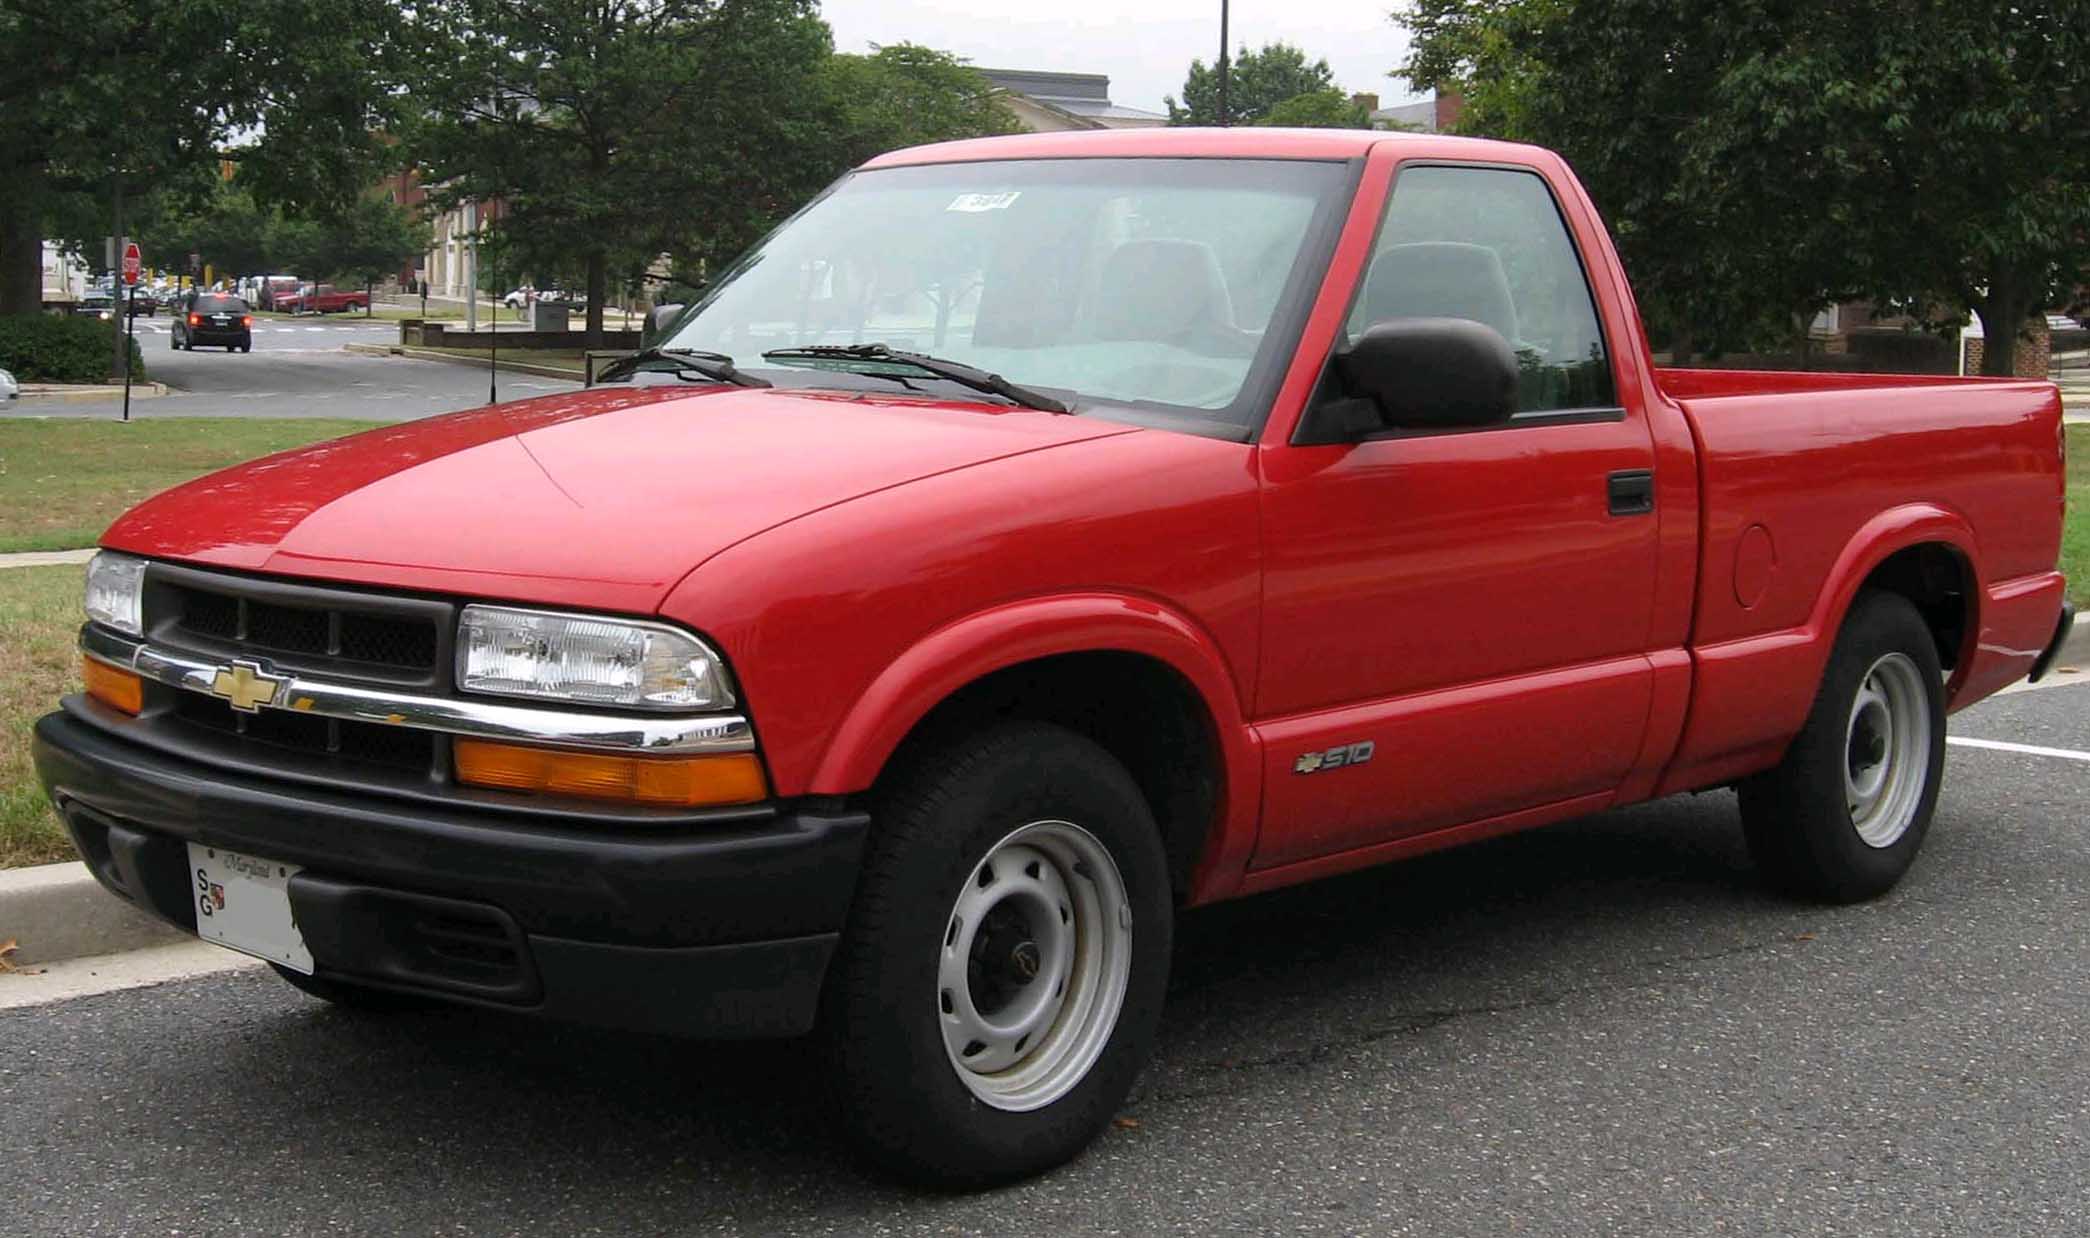 Chevrolet S-10 - Wikipedia